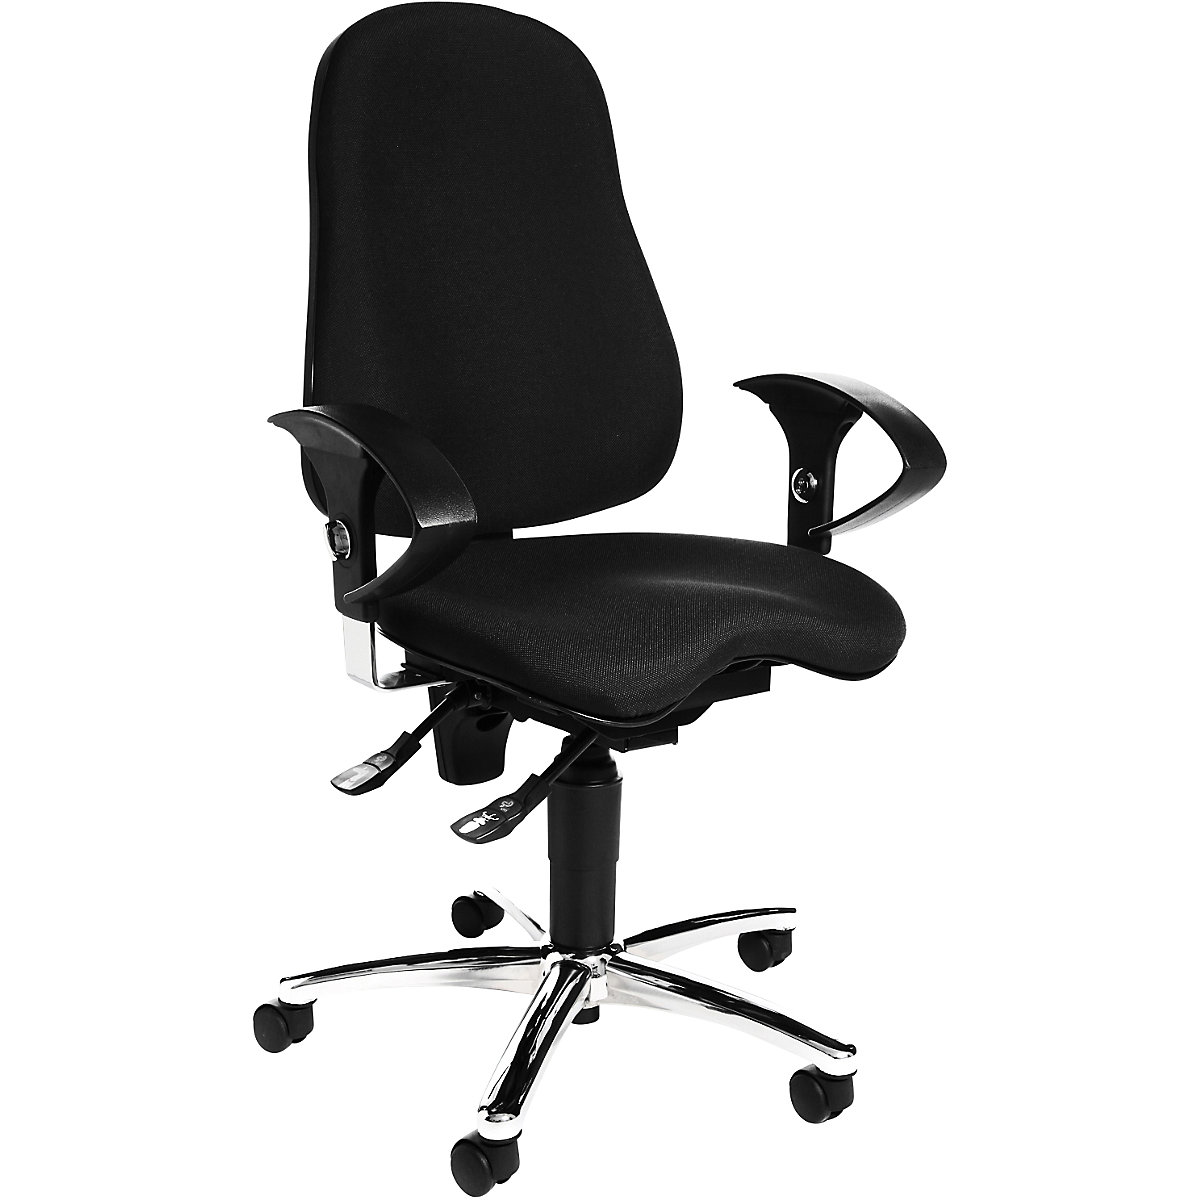 SITNESS 10 office swivel chair - Topstar